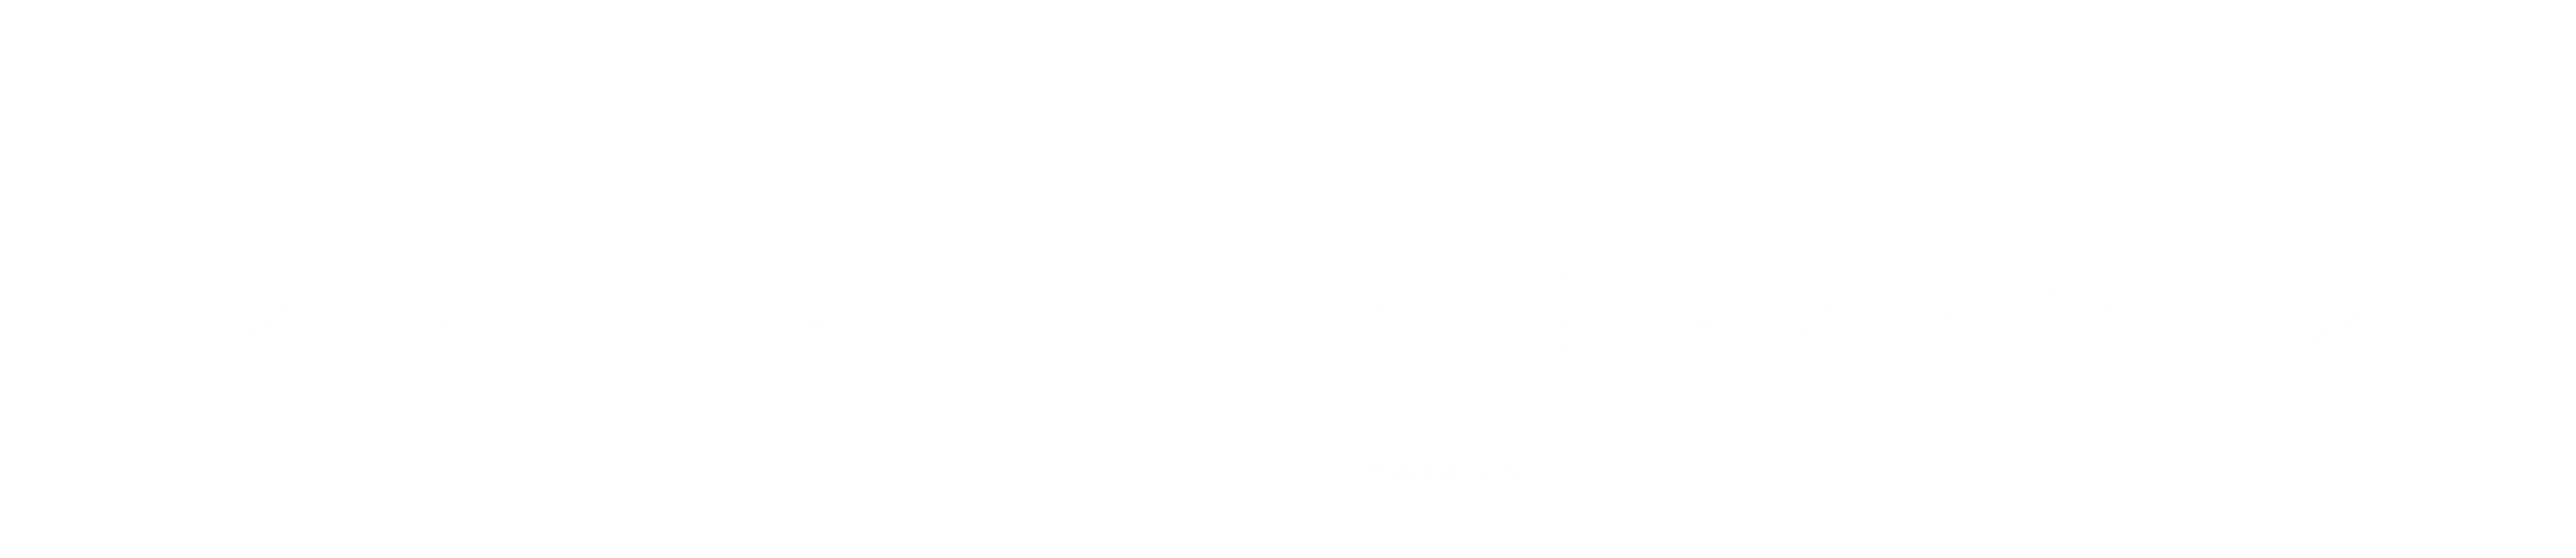 Commacad New Logo - dark bg